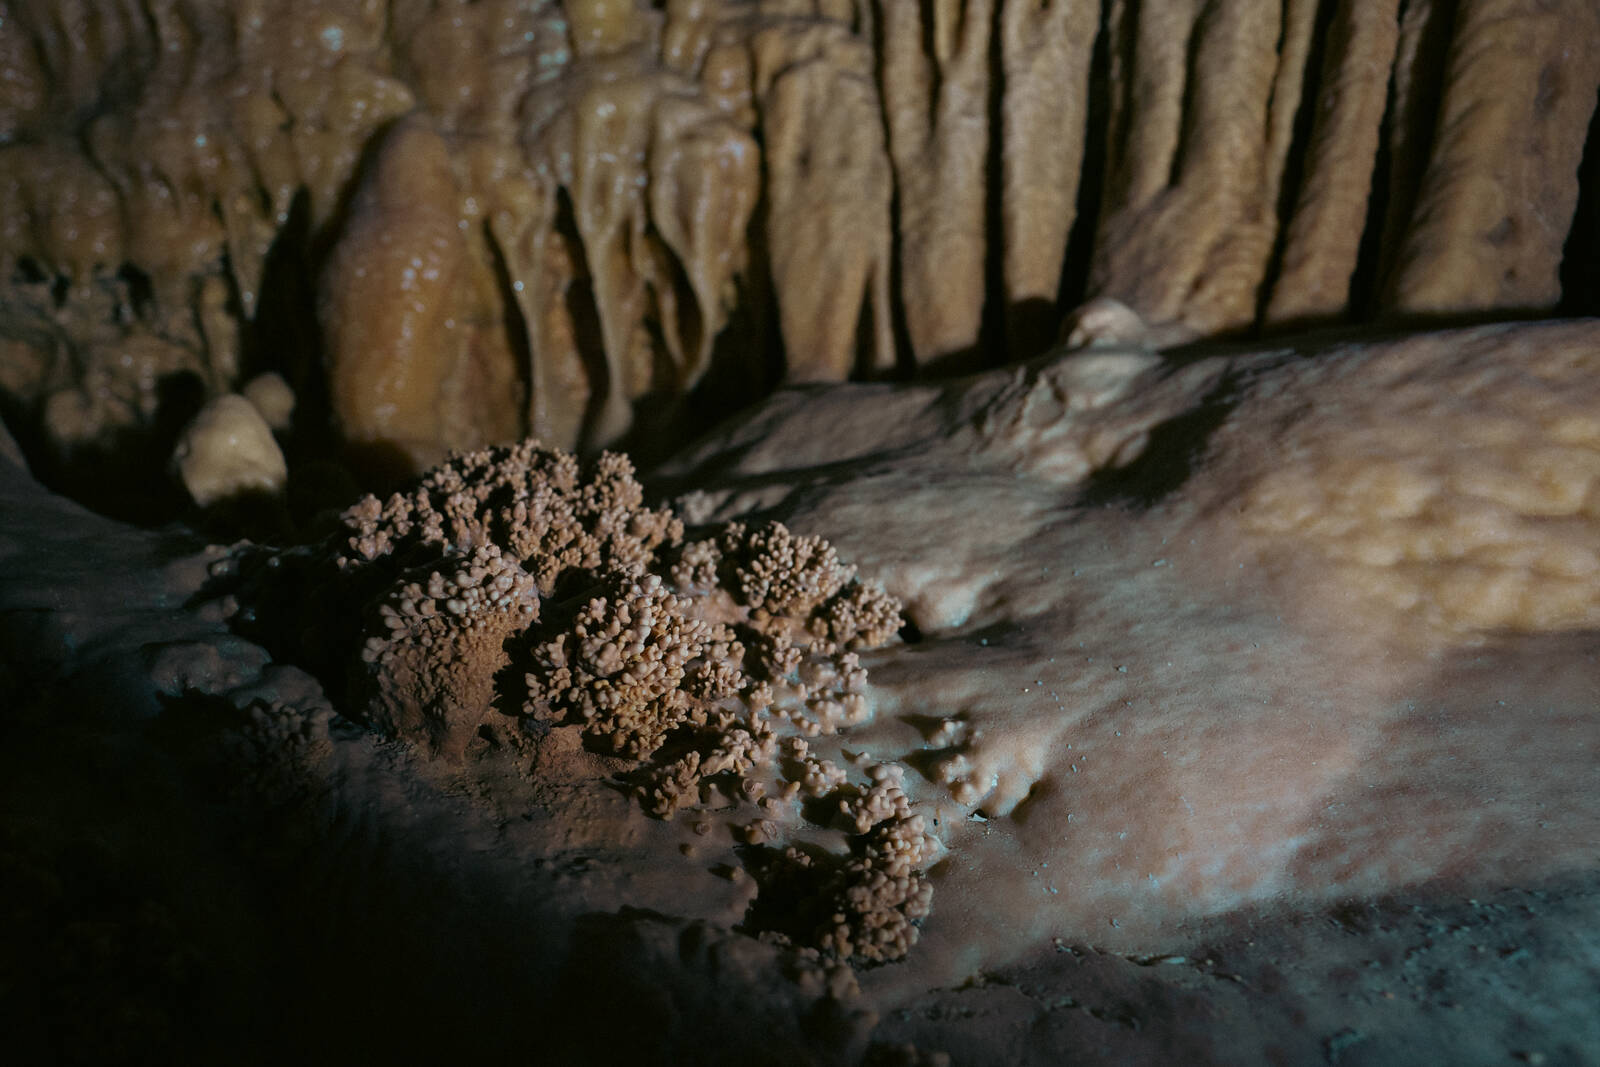 Image of Natural Bridge Caverns by James Billings.